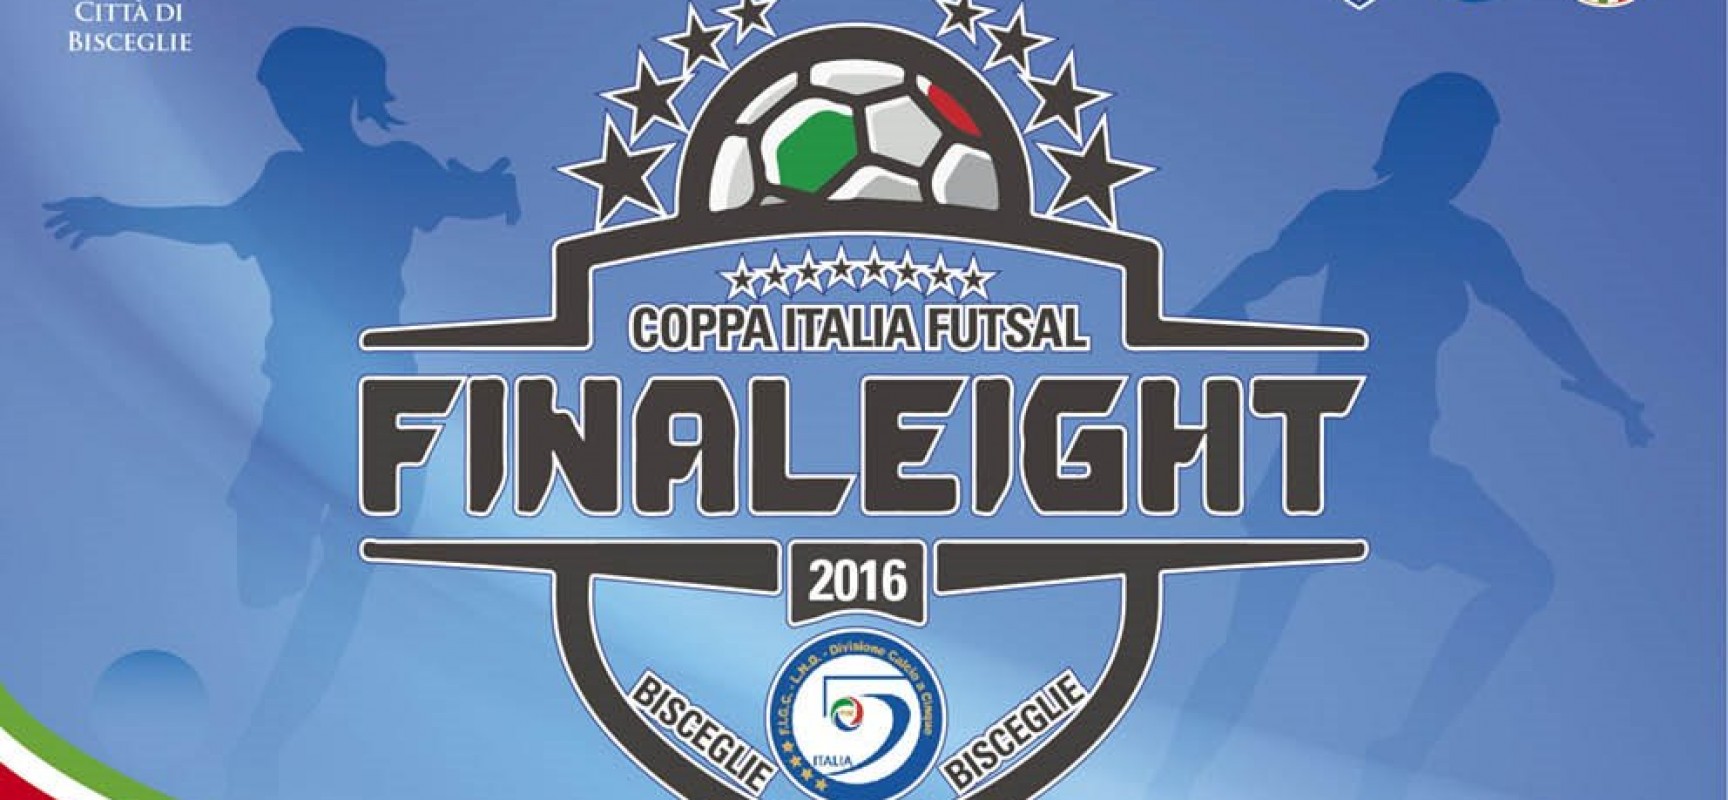 Calcio a 5: A Bisceglie Final Eight di Serie C femminile, oggi effettuati i sorteggi /TABELLONE